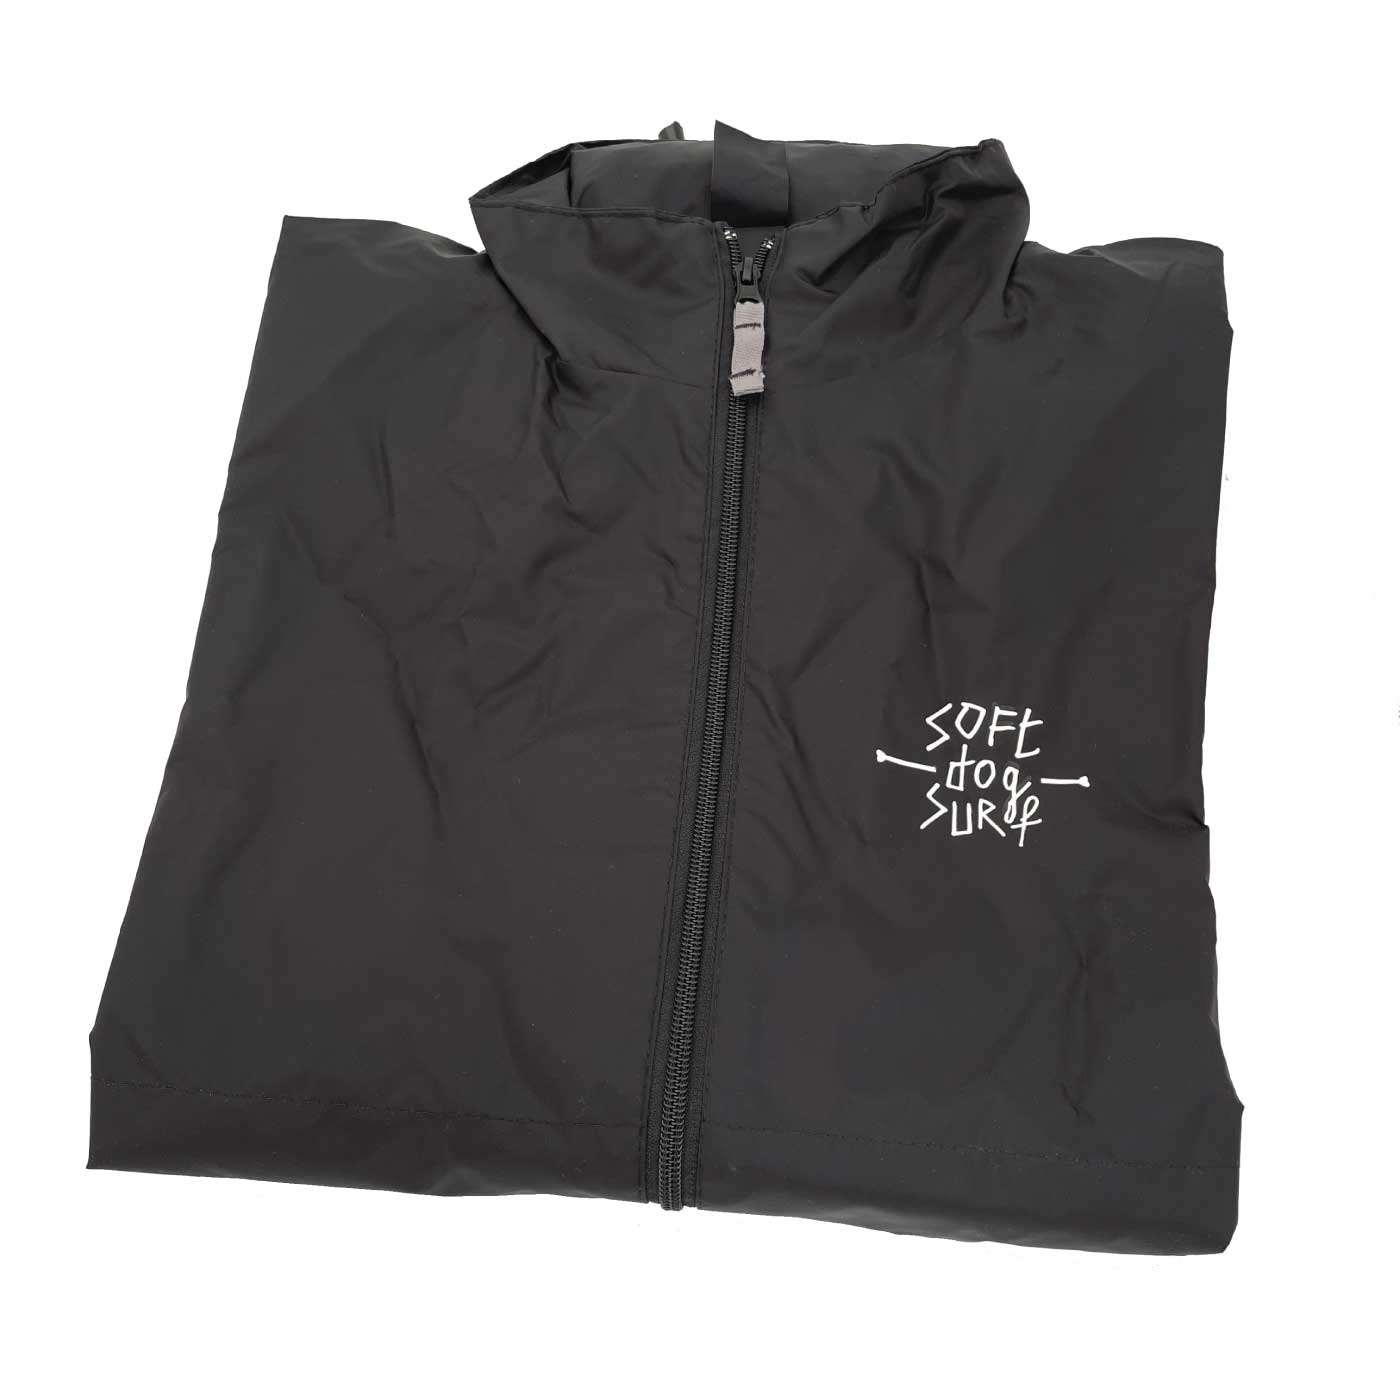 softdogsurf apparel jacket detailfoto